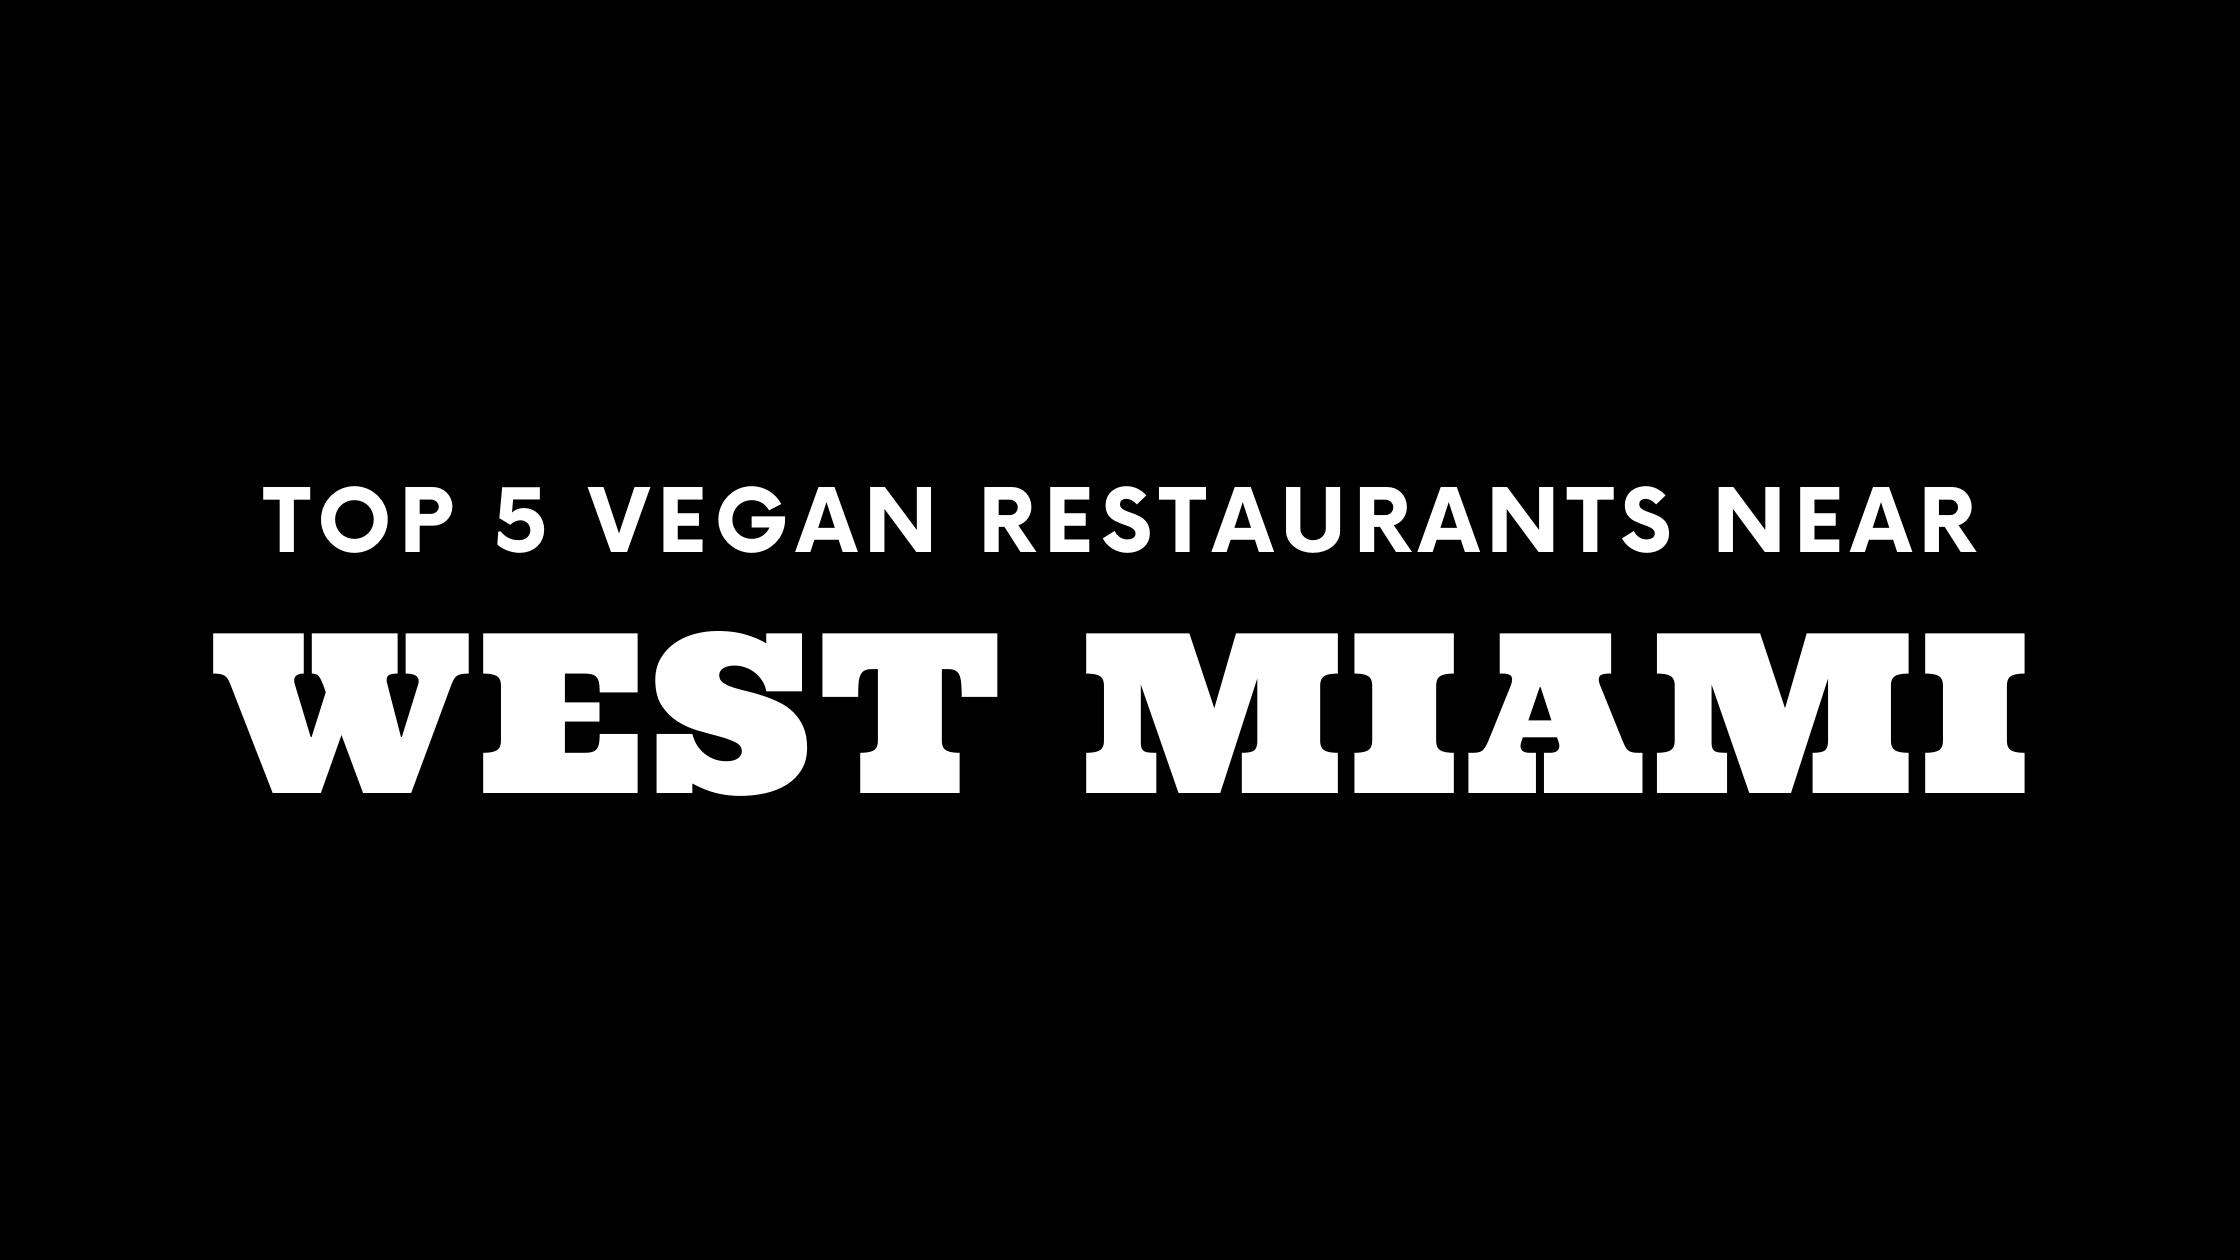 Top 5 Vegan Restaurants Near West Miami